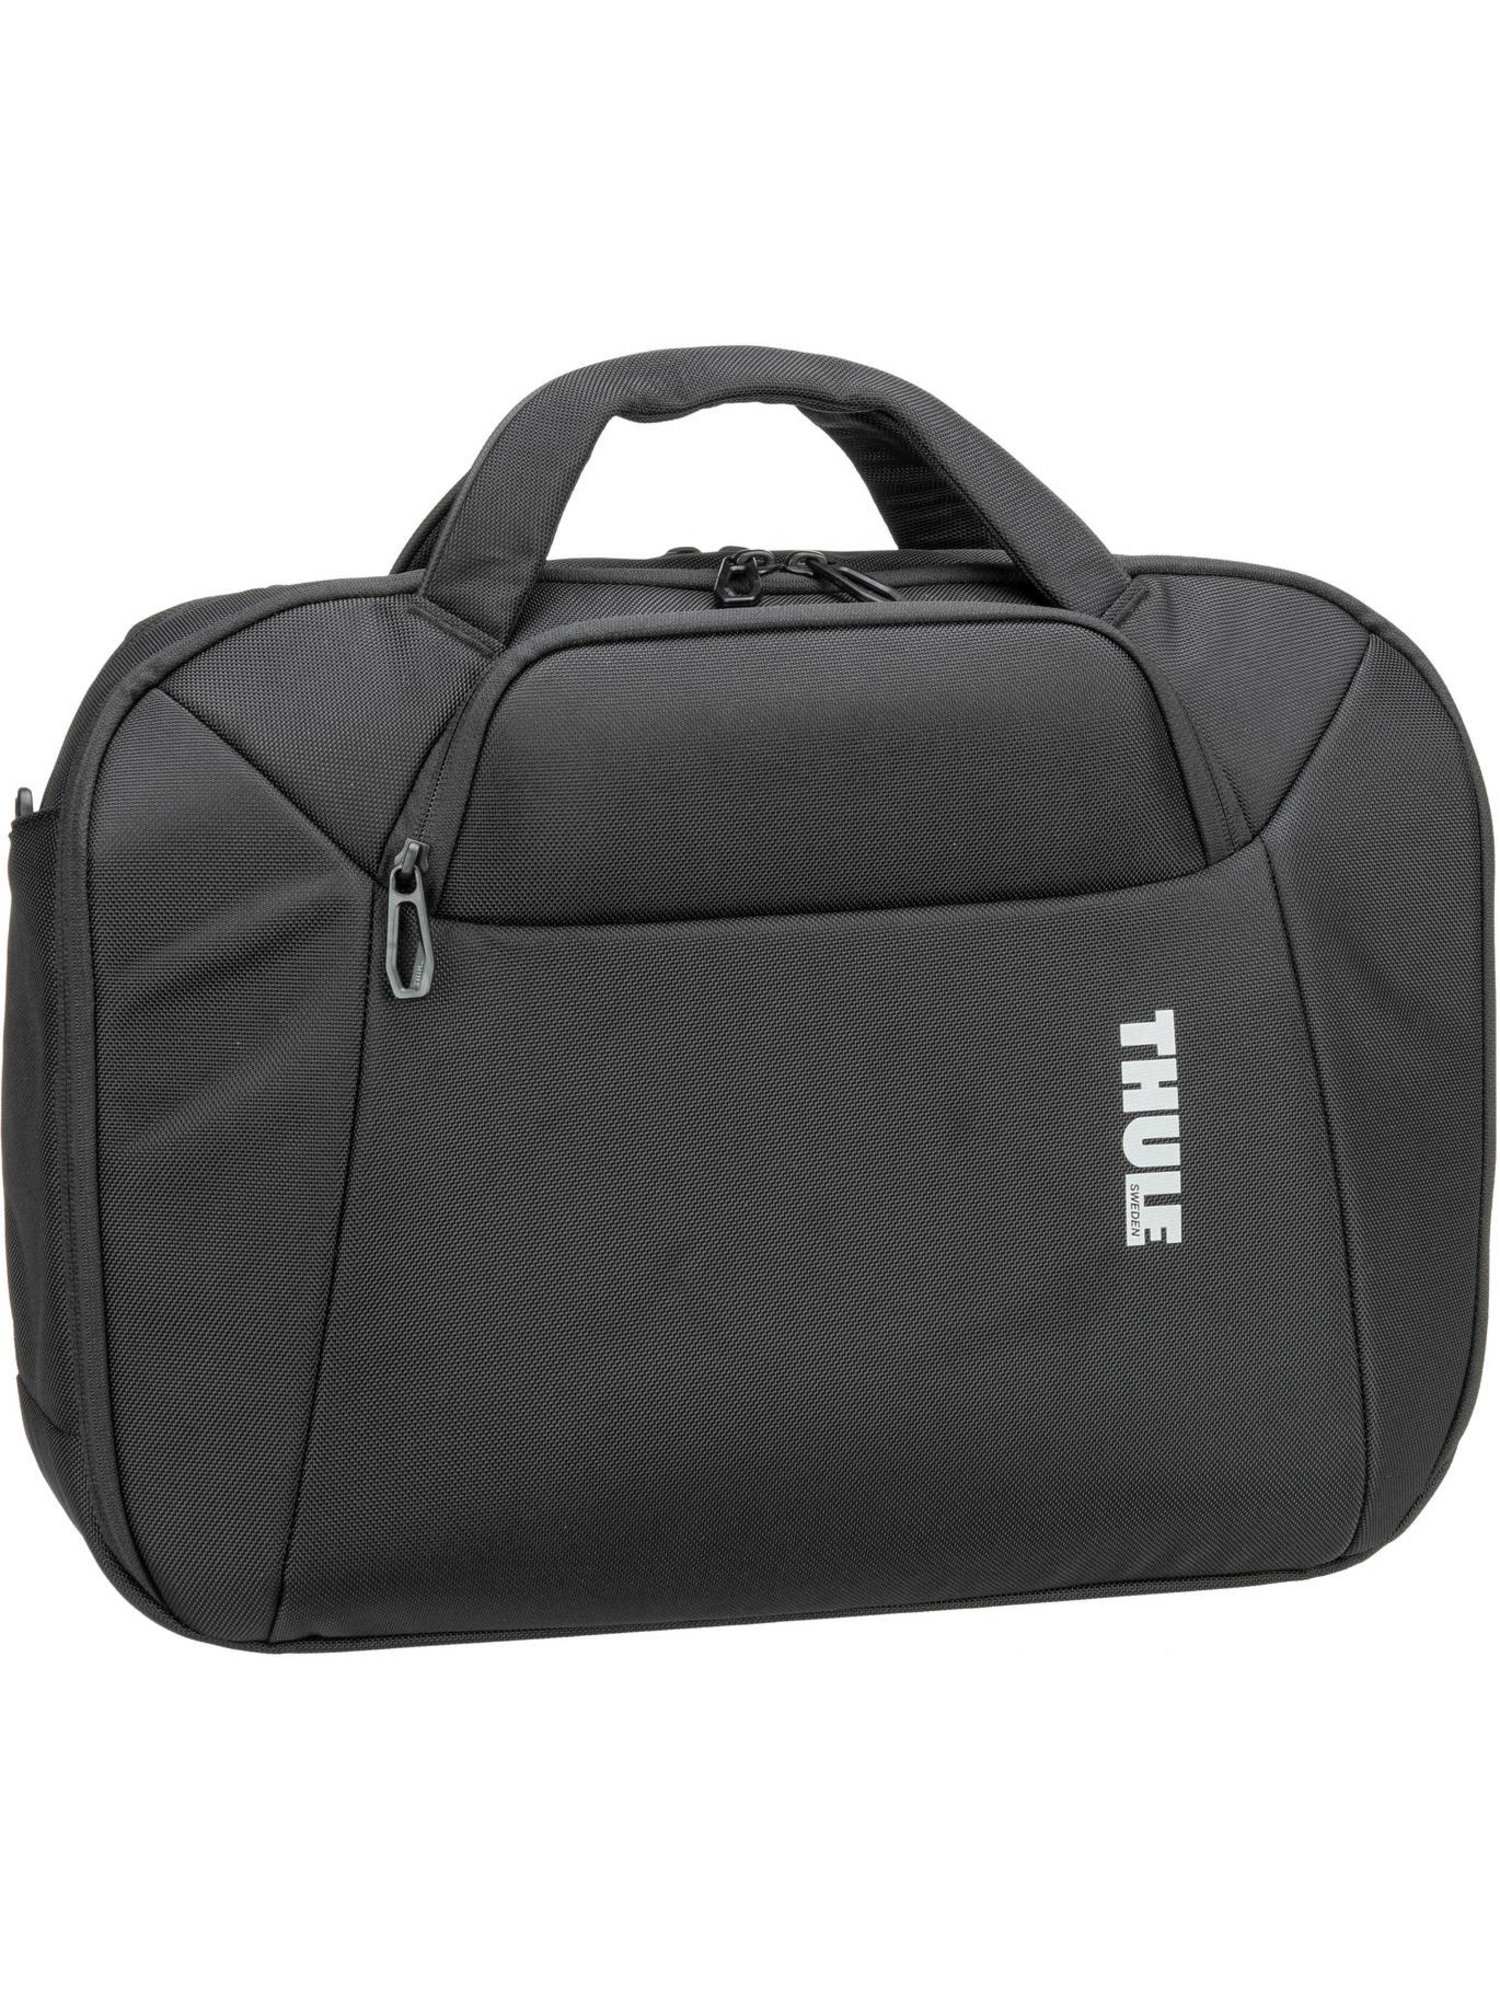 Сумка для ноутбука Thule Accent Briefcase 17L, черный цена и фото